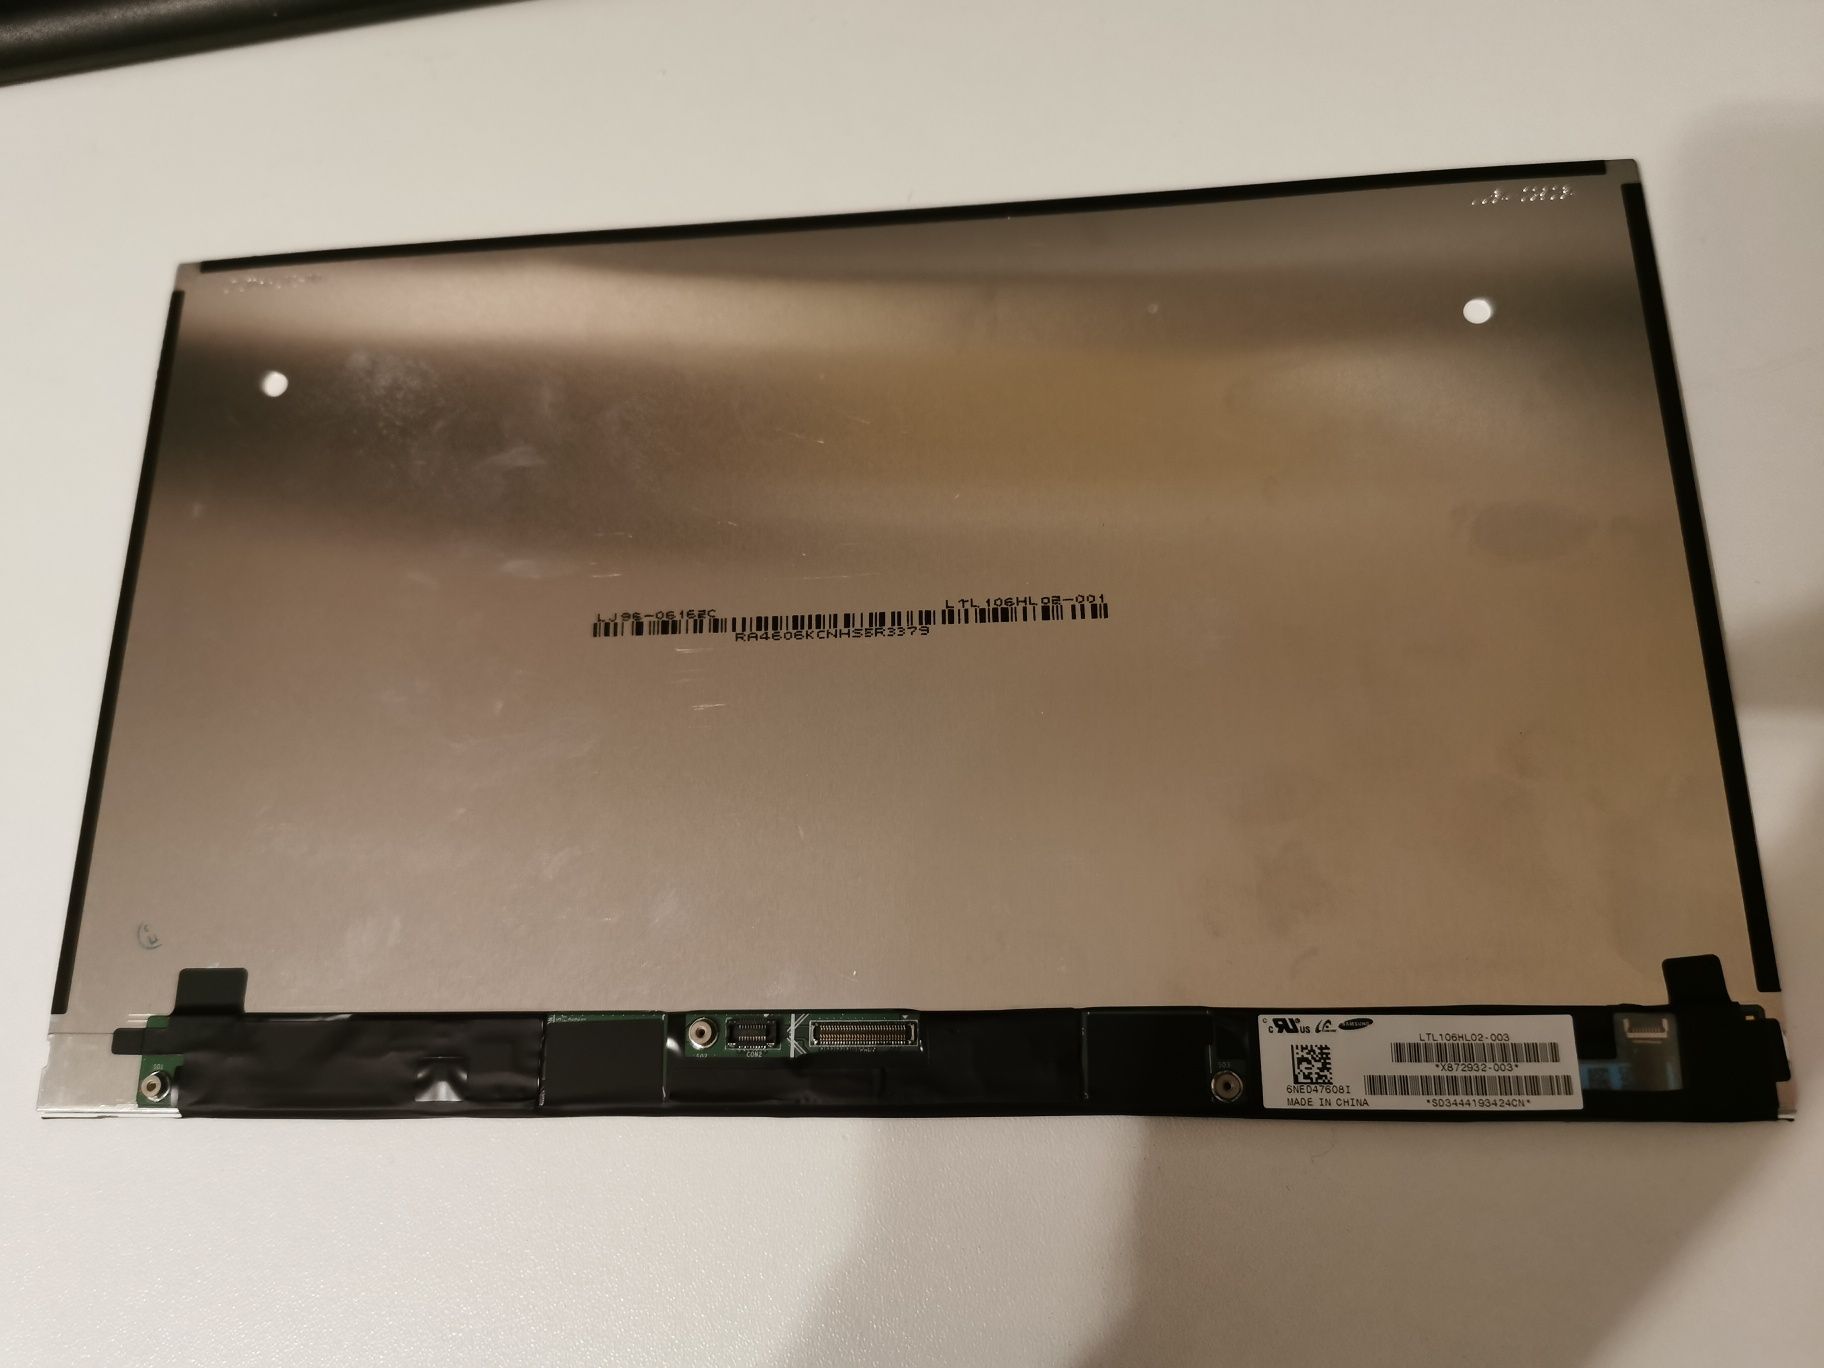 Display laptop 10.6inch Samsung LTL106HL02-003 fhd